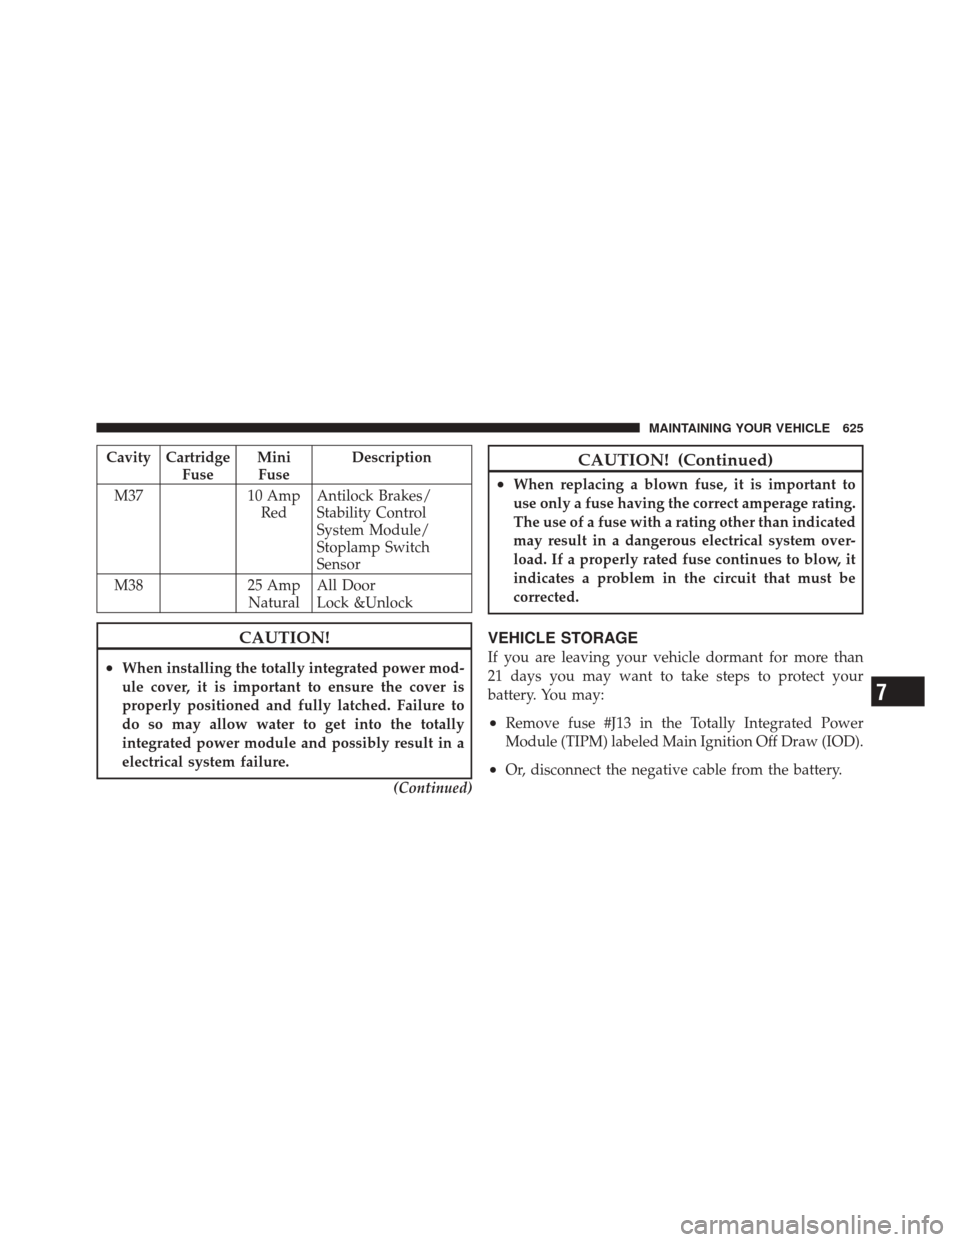 DODGE DURANGO 2012 3.G Owners Manual Cavity CartridgeFuseMini
Fuse Description
M37 10 Amp RedAntilock Brakes/
Stability Control
System Module/
Stoplamp Switch
Sensor
M38 25 Amp NaturalAll Door
Lock &Unlock
CAUTION!
•When installing the